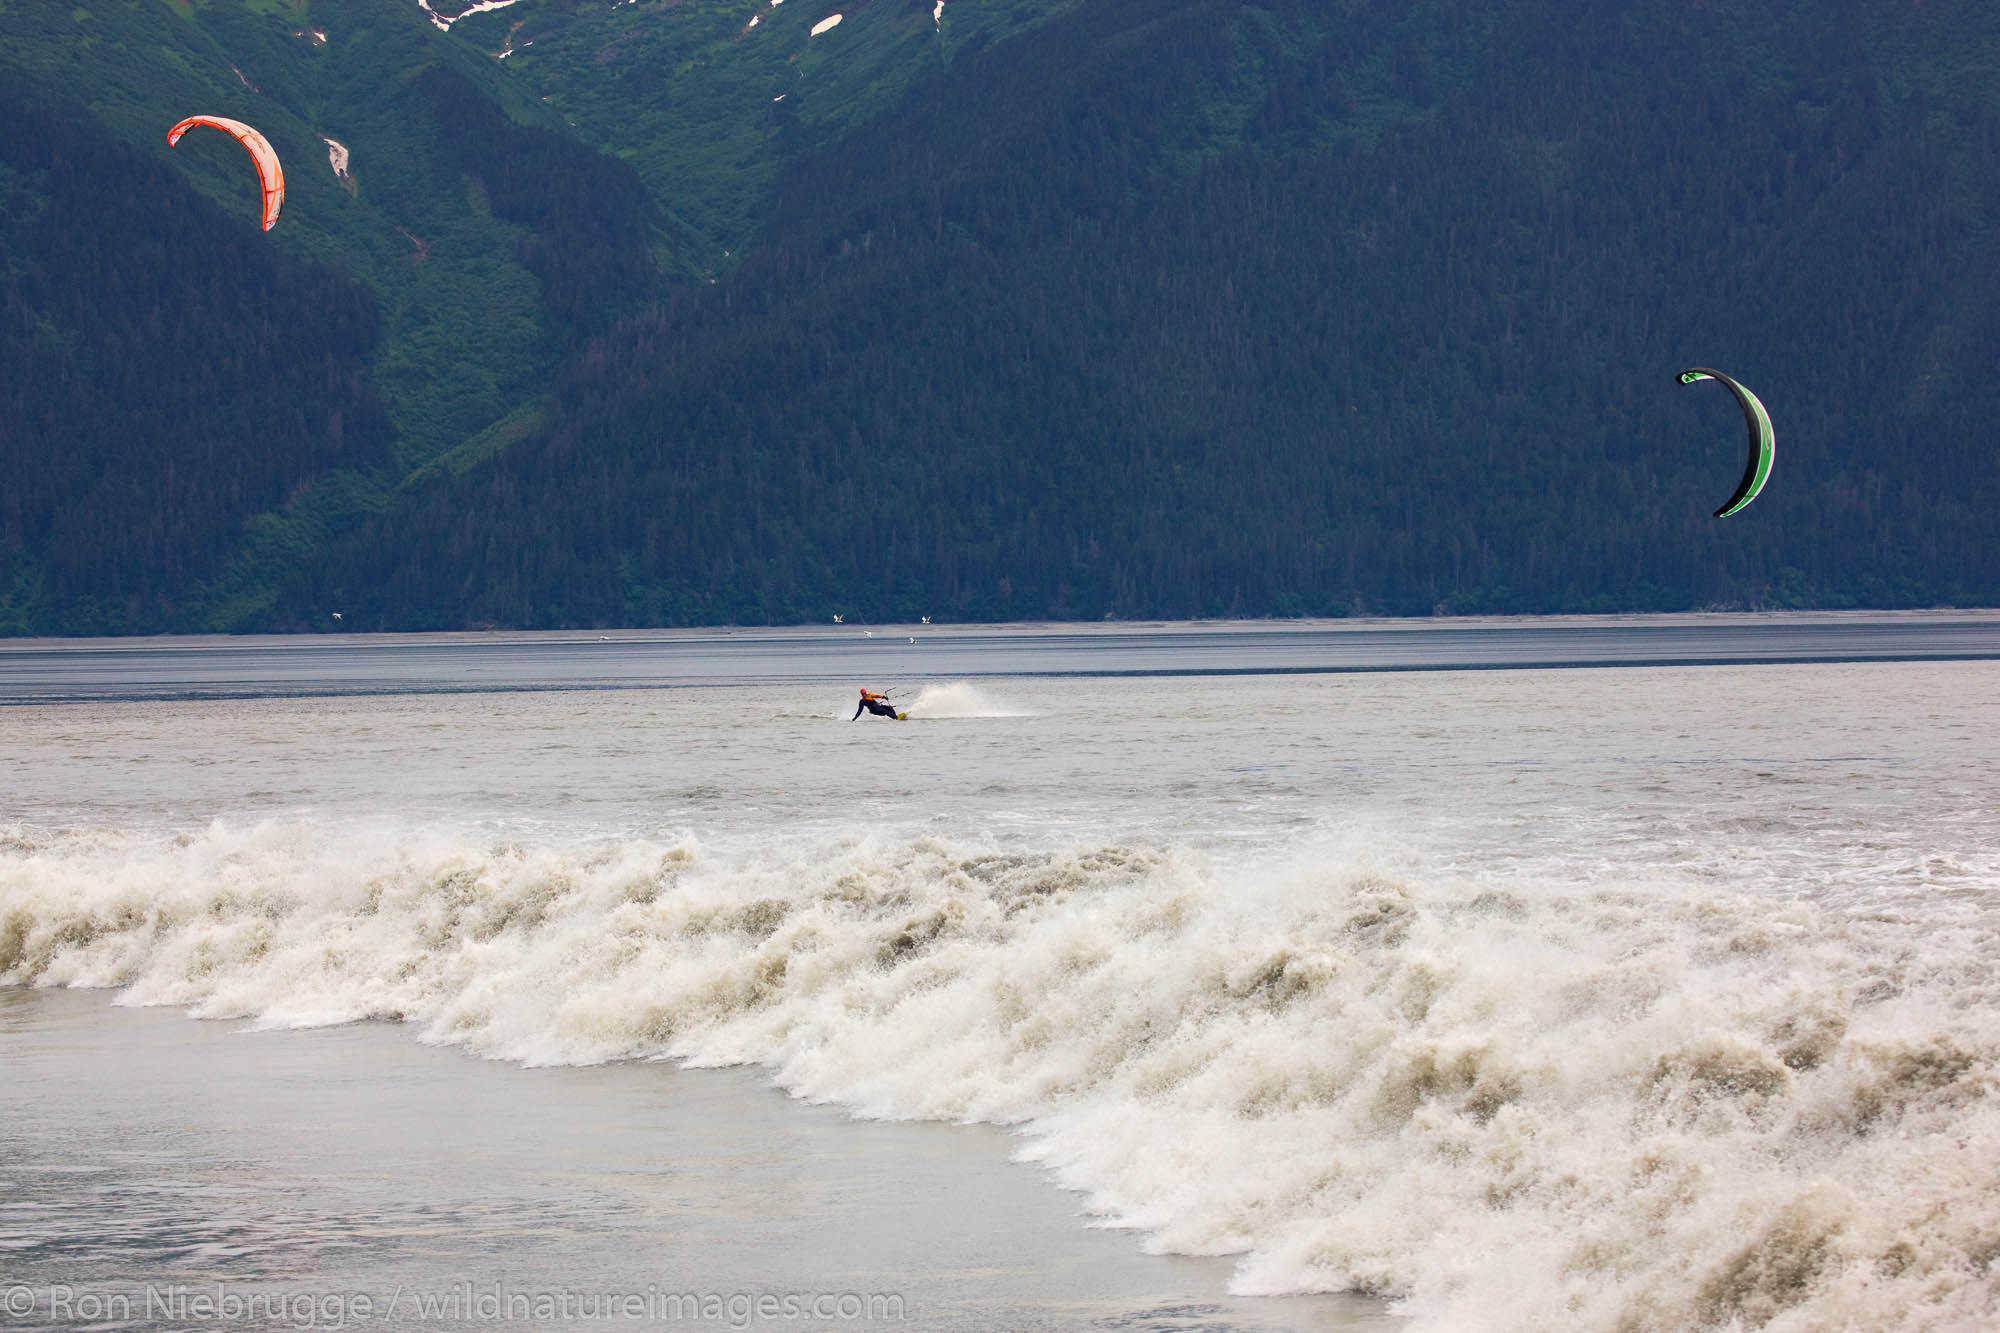 Troy and Mark kiteboarding the Bore Tide on Turnagain Arm, near Anchorage, Alaska.